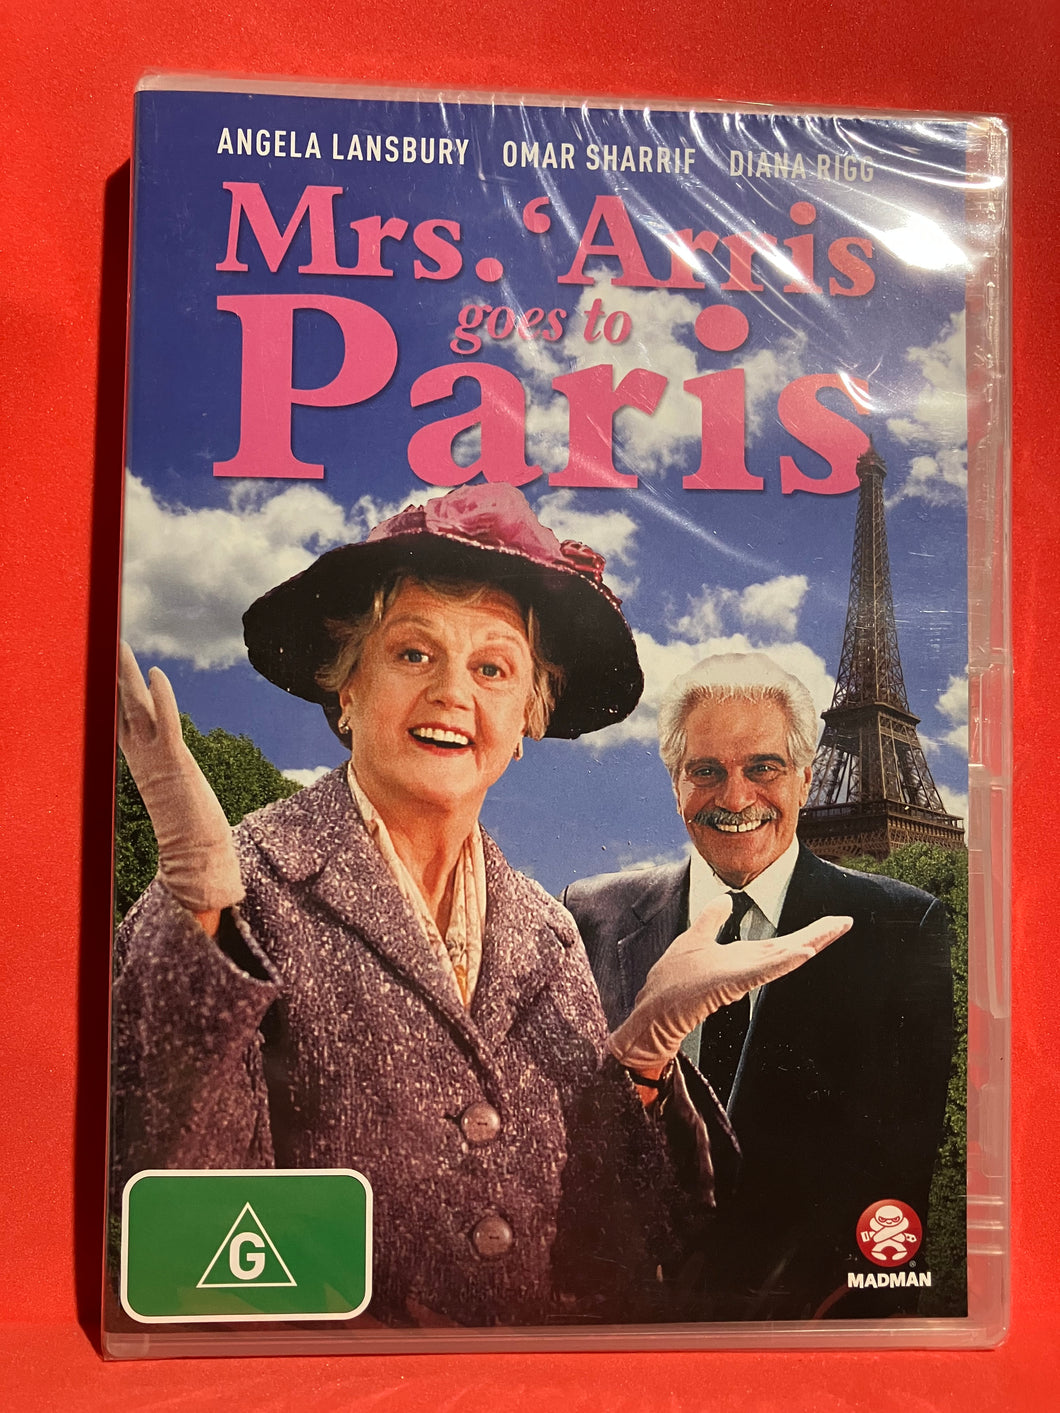 MRS 'ARRIS GOES TO PARIS - DVD (SEALED)